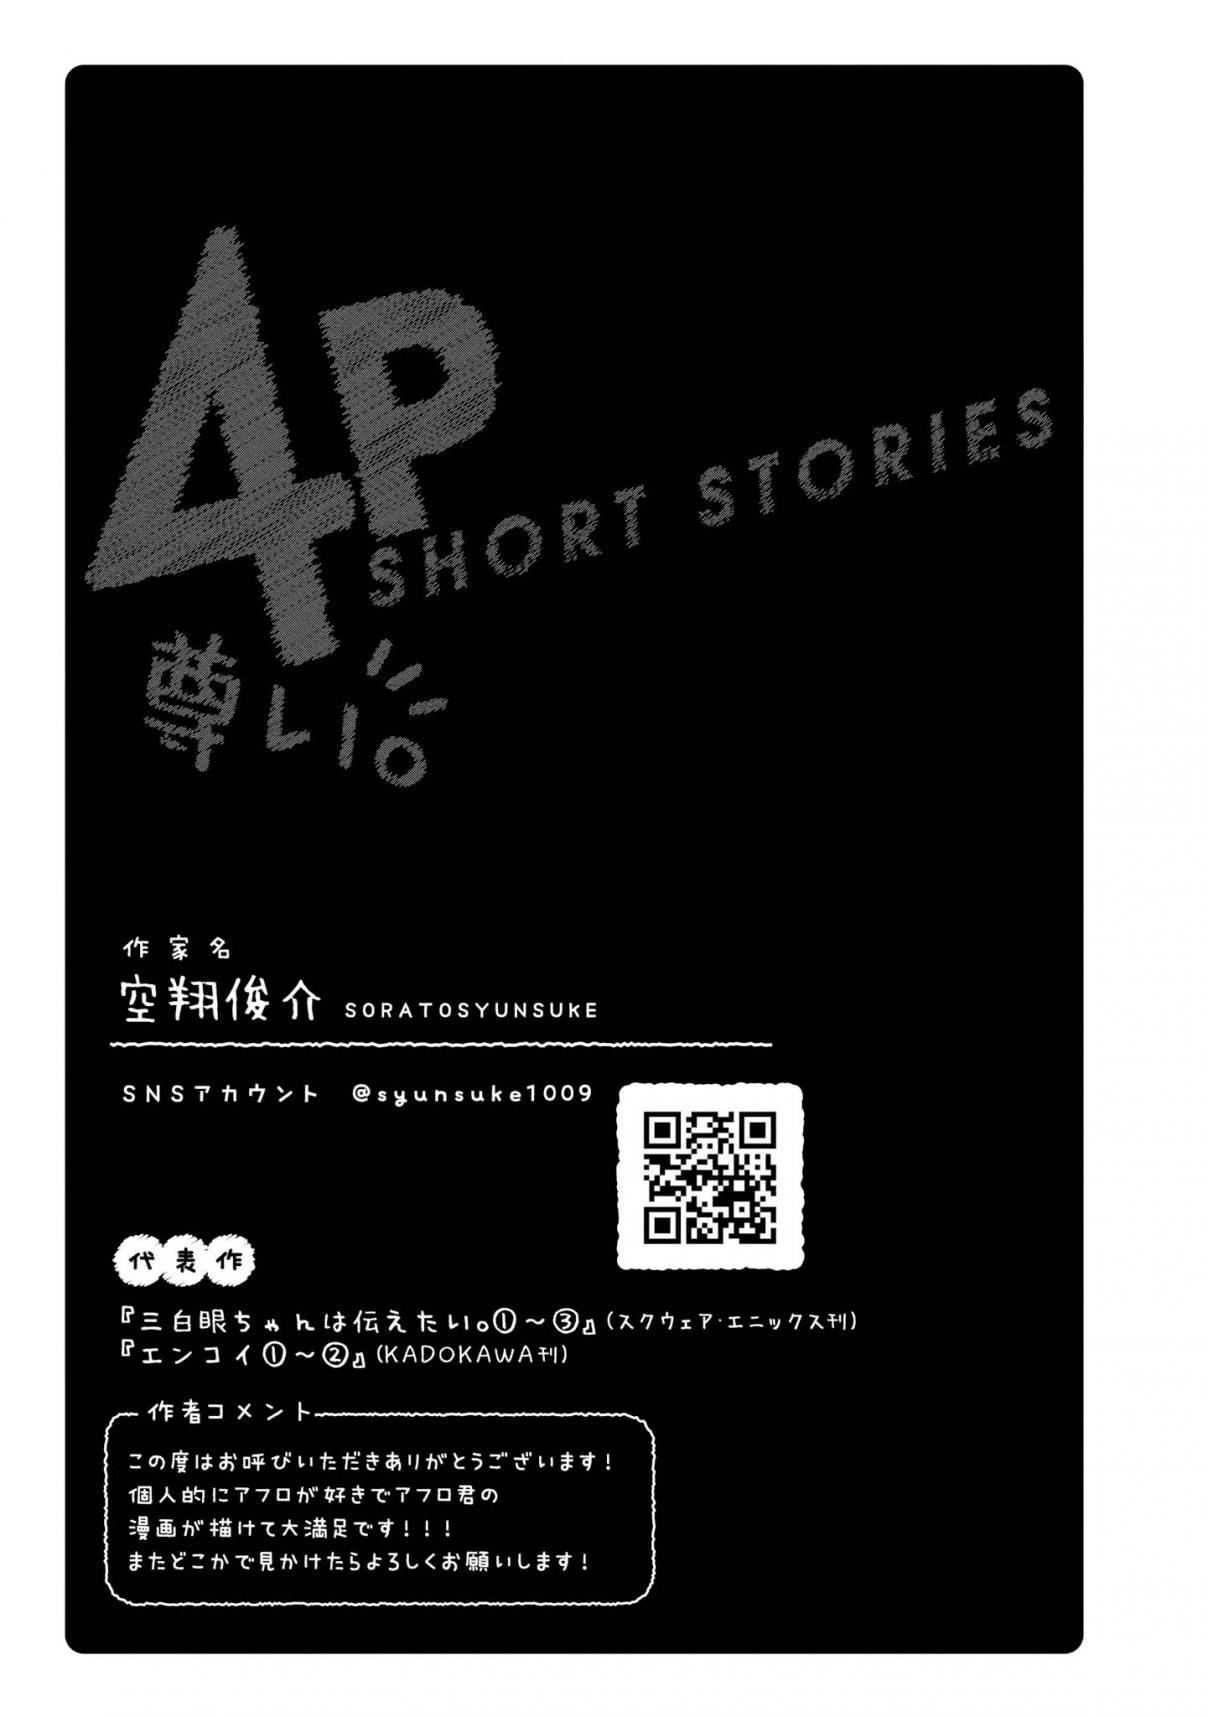 Precious 4p Short Stories Ch. 24 Afro's Love [by Sorato Shunsuke]